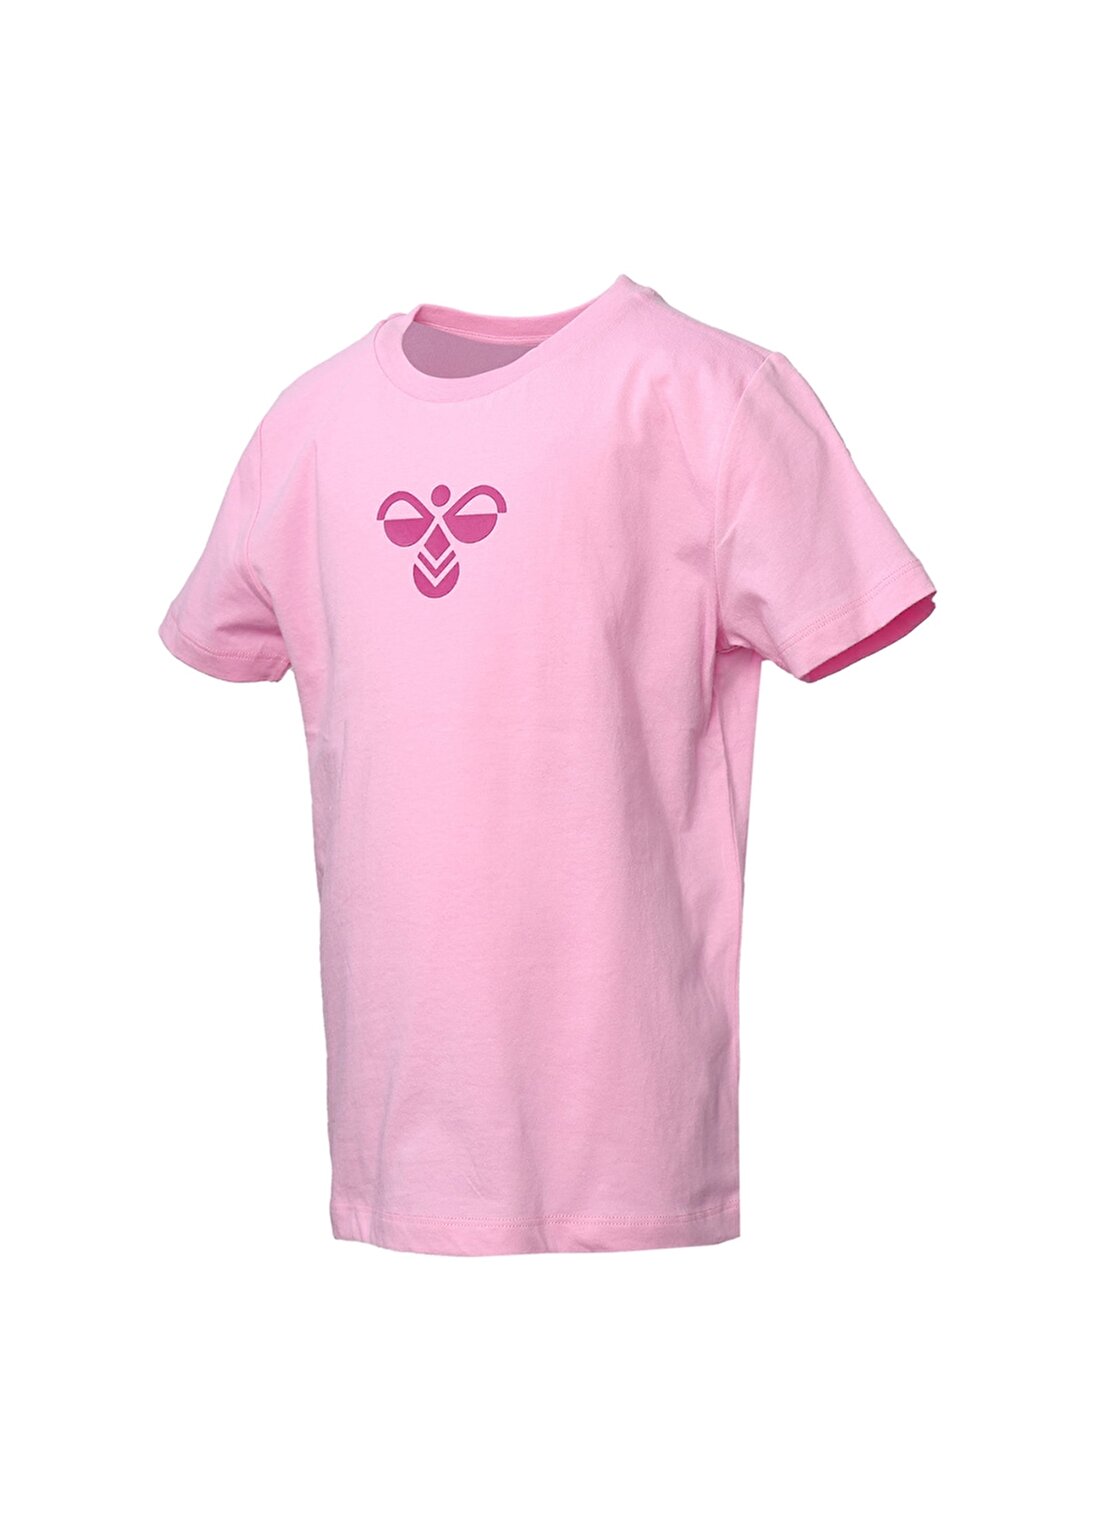 Hummel CAMEL T-SHIRTS Pembe Kız Çocuk T-Shirt 911298-2121